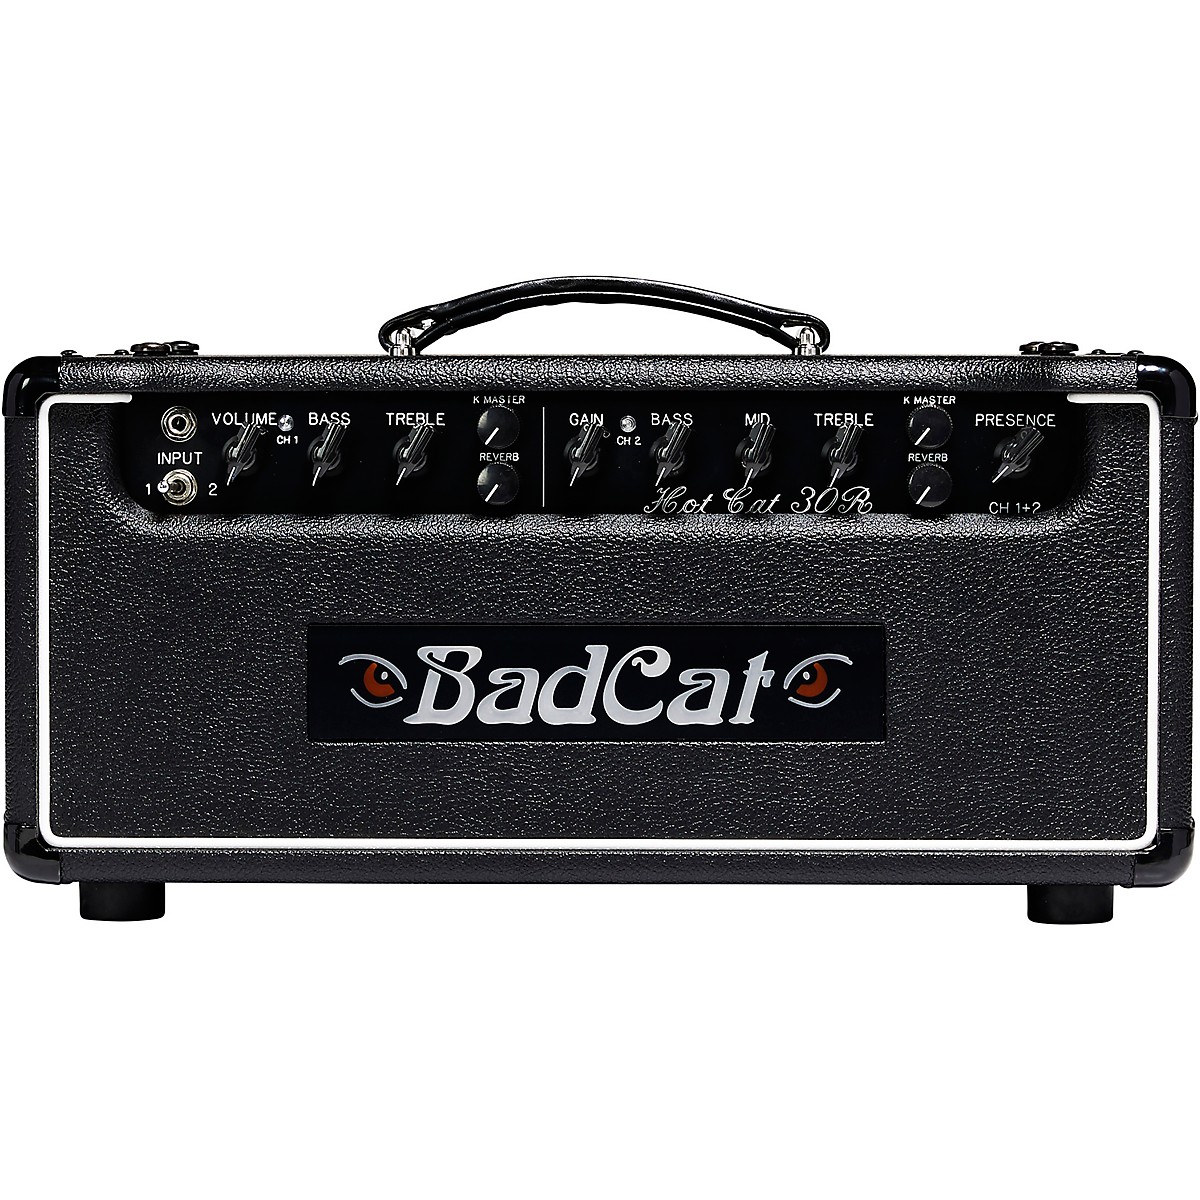 Bad Cat Hot Cat 30W Guitar Amp Head with Reverb | Guitar ...